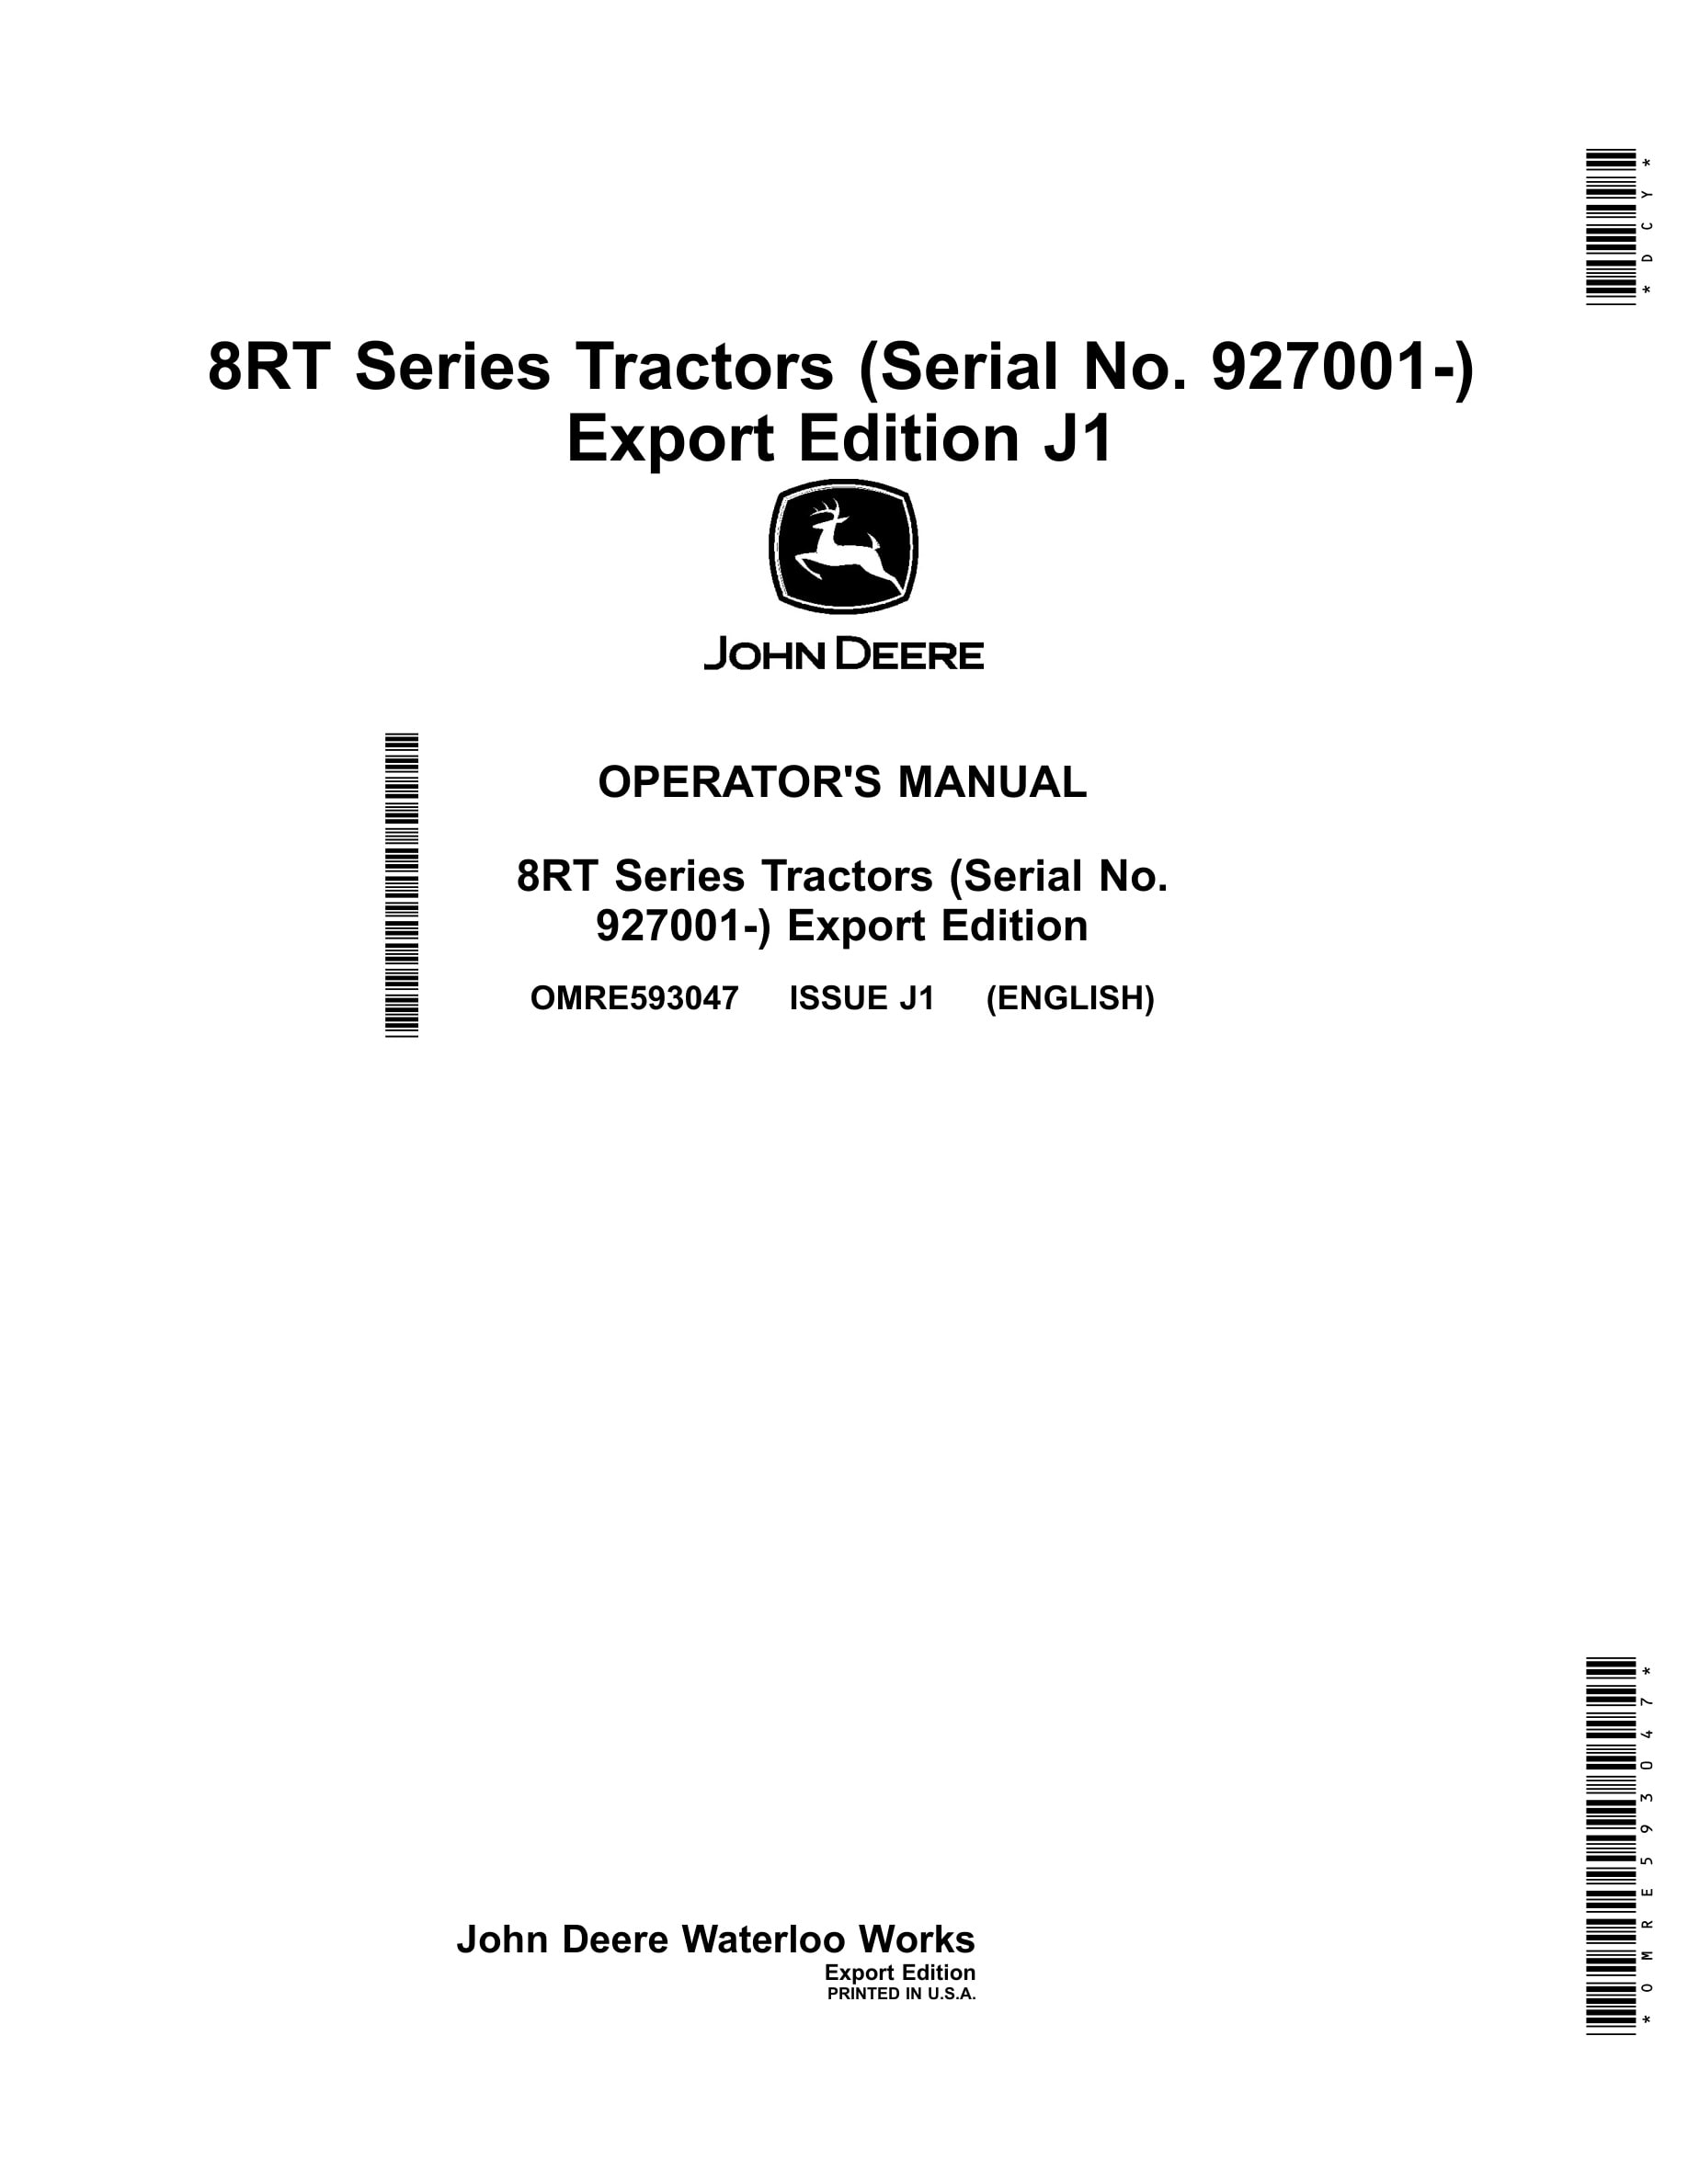 John Deere 8rt Series Tractors Operator Manuals OMRE593047-1